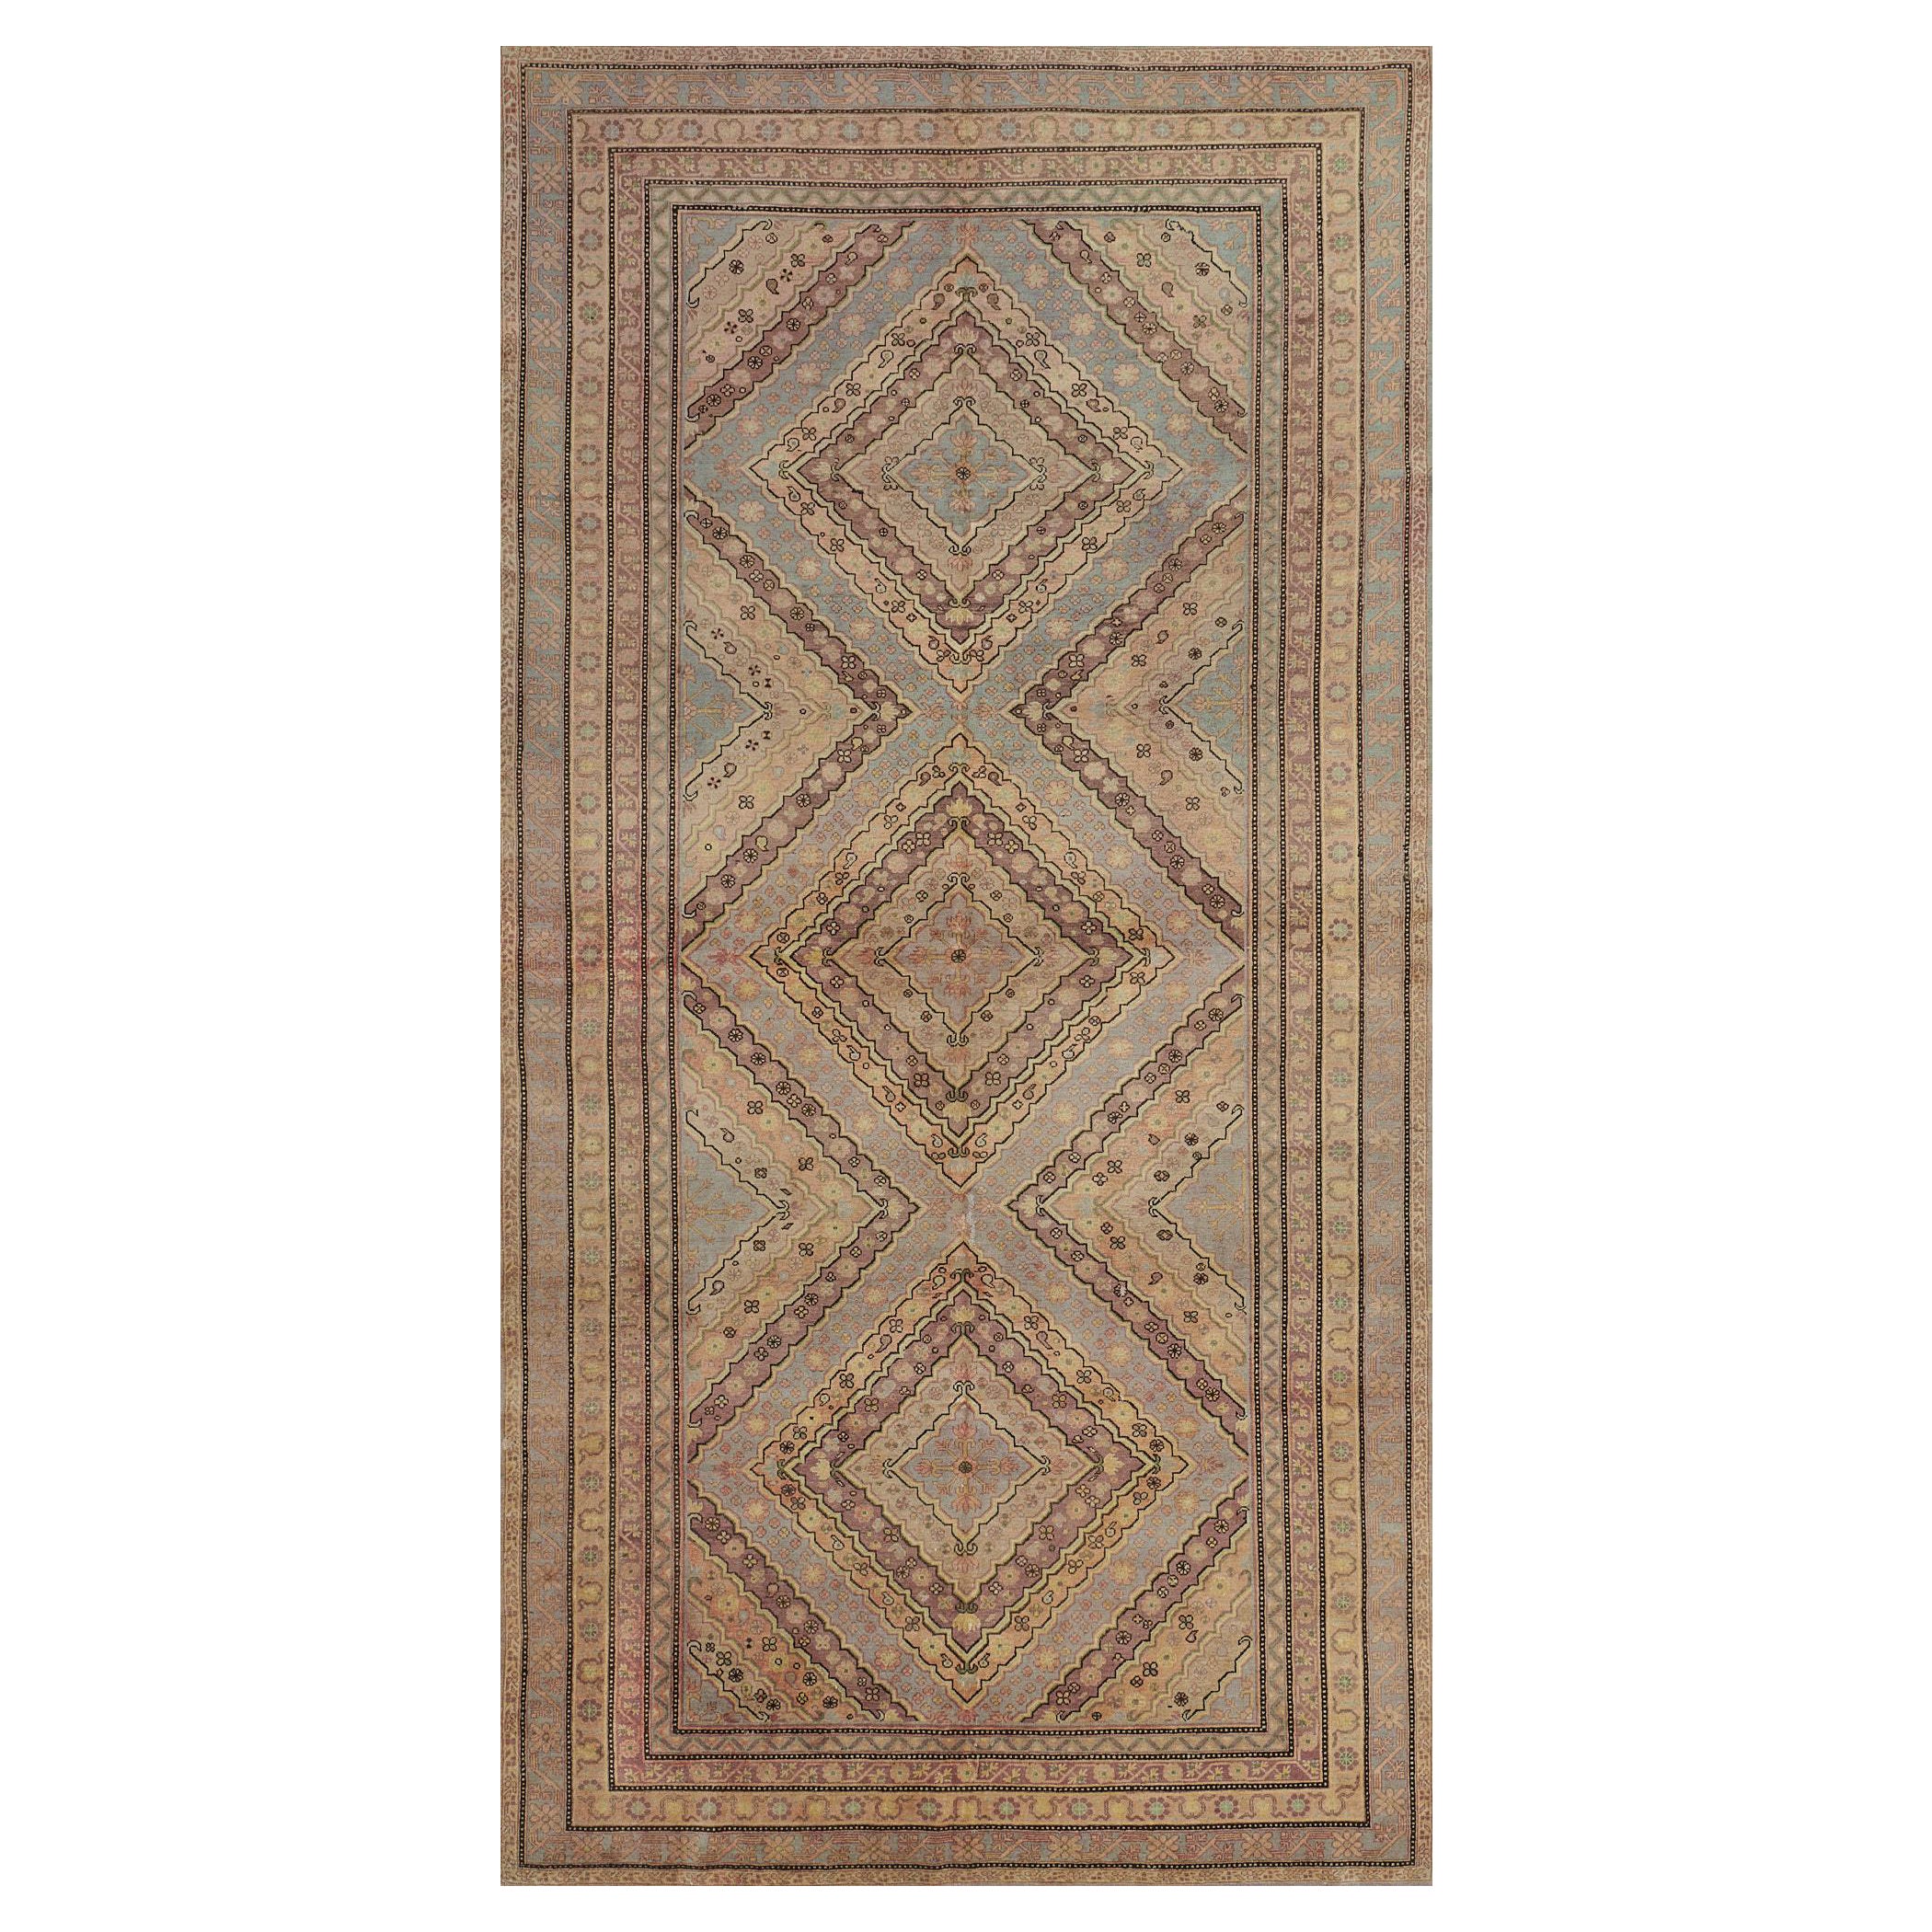 Antiker Khotan-Teppich aus Wolle CIRCA 1900